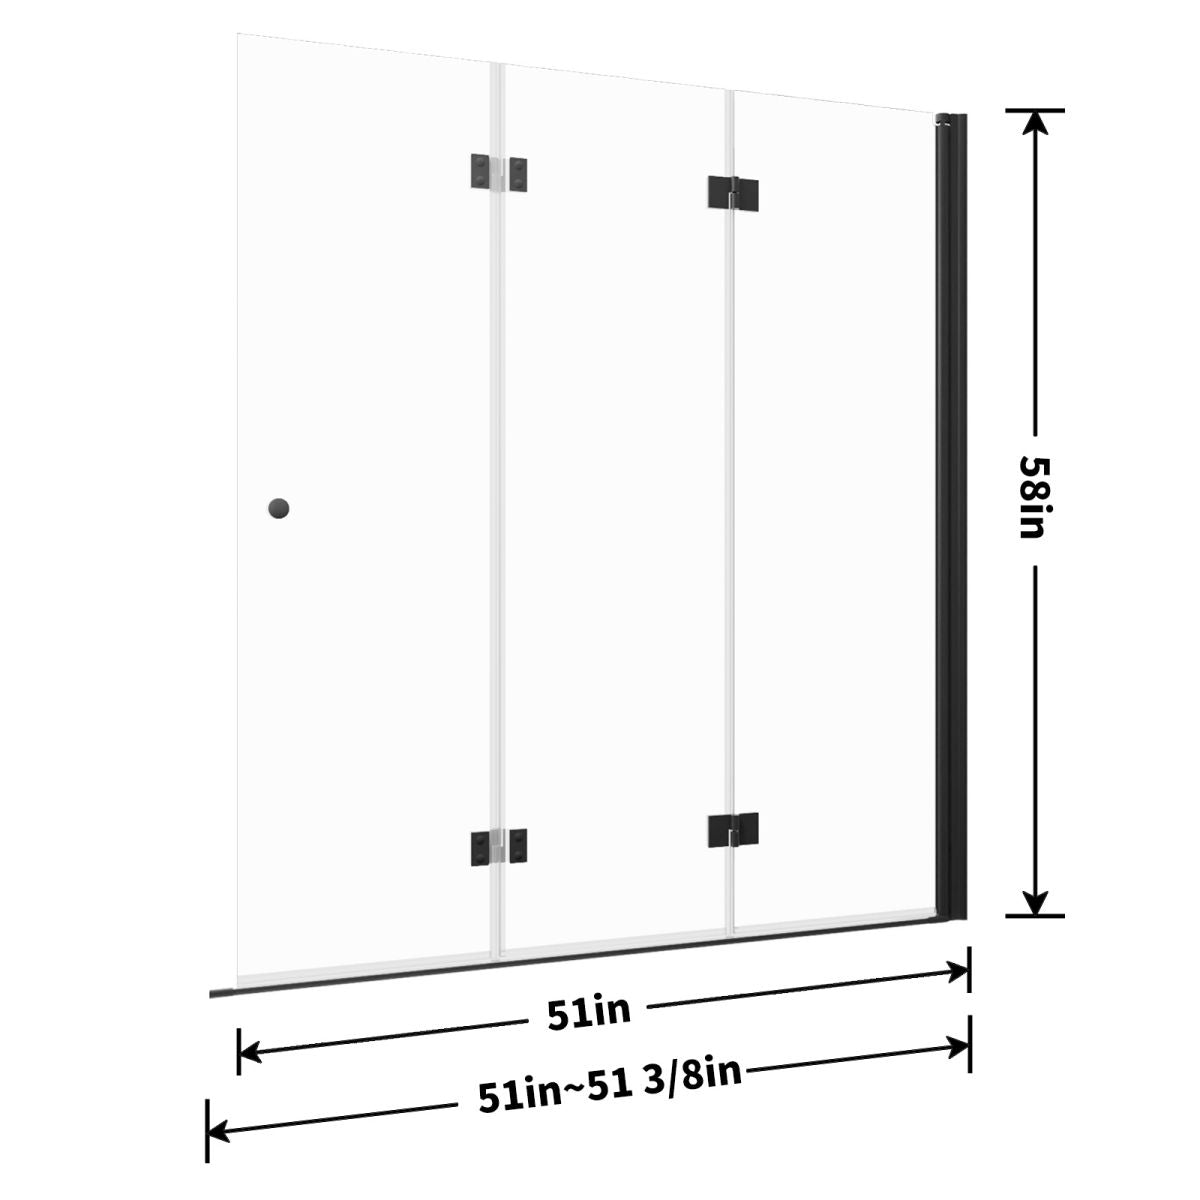 Serenity Folding Shower Door Over Tub,51" W*58" H Pivot Frameless Tub Shower Door,Clear Tempered Glass Shower Screen Panel,Matte Black